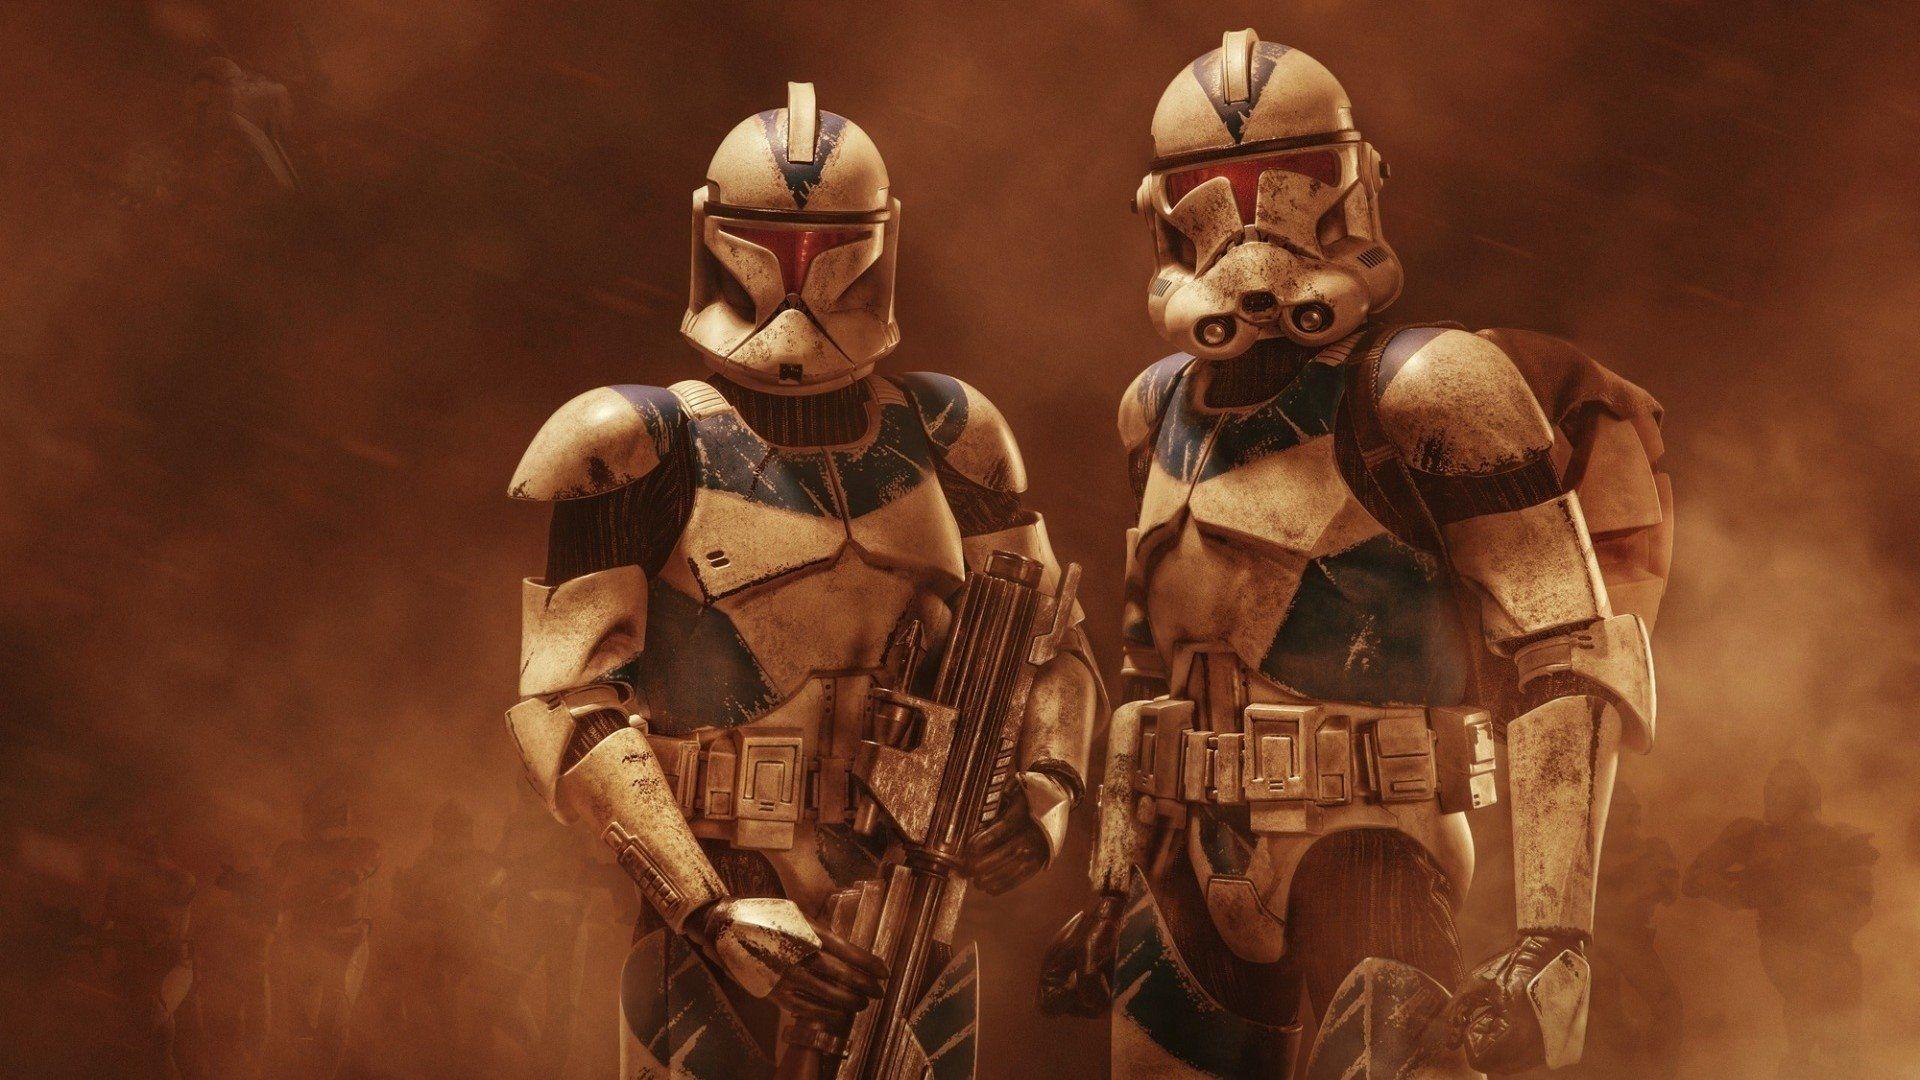 Star Wars Wallpapers Clone Trooper Wallpaper Cave